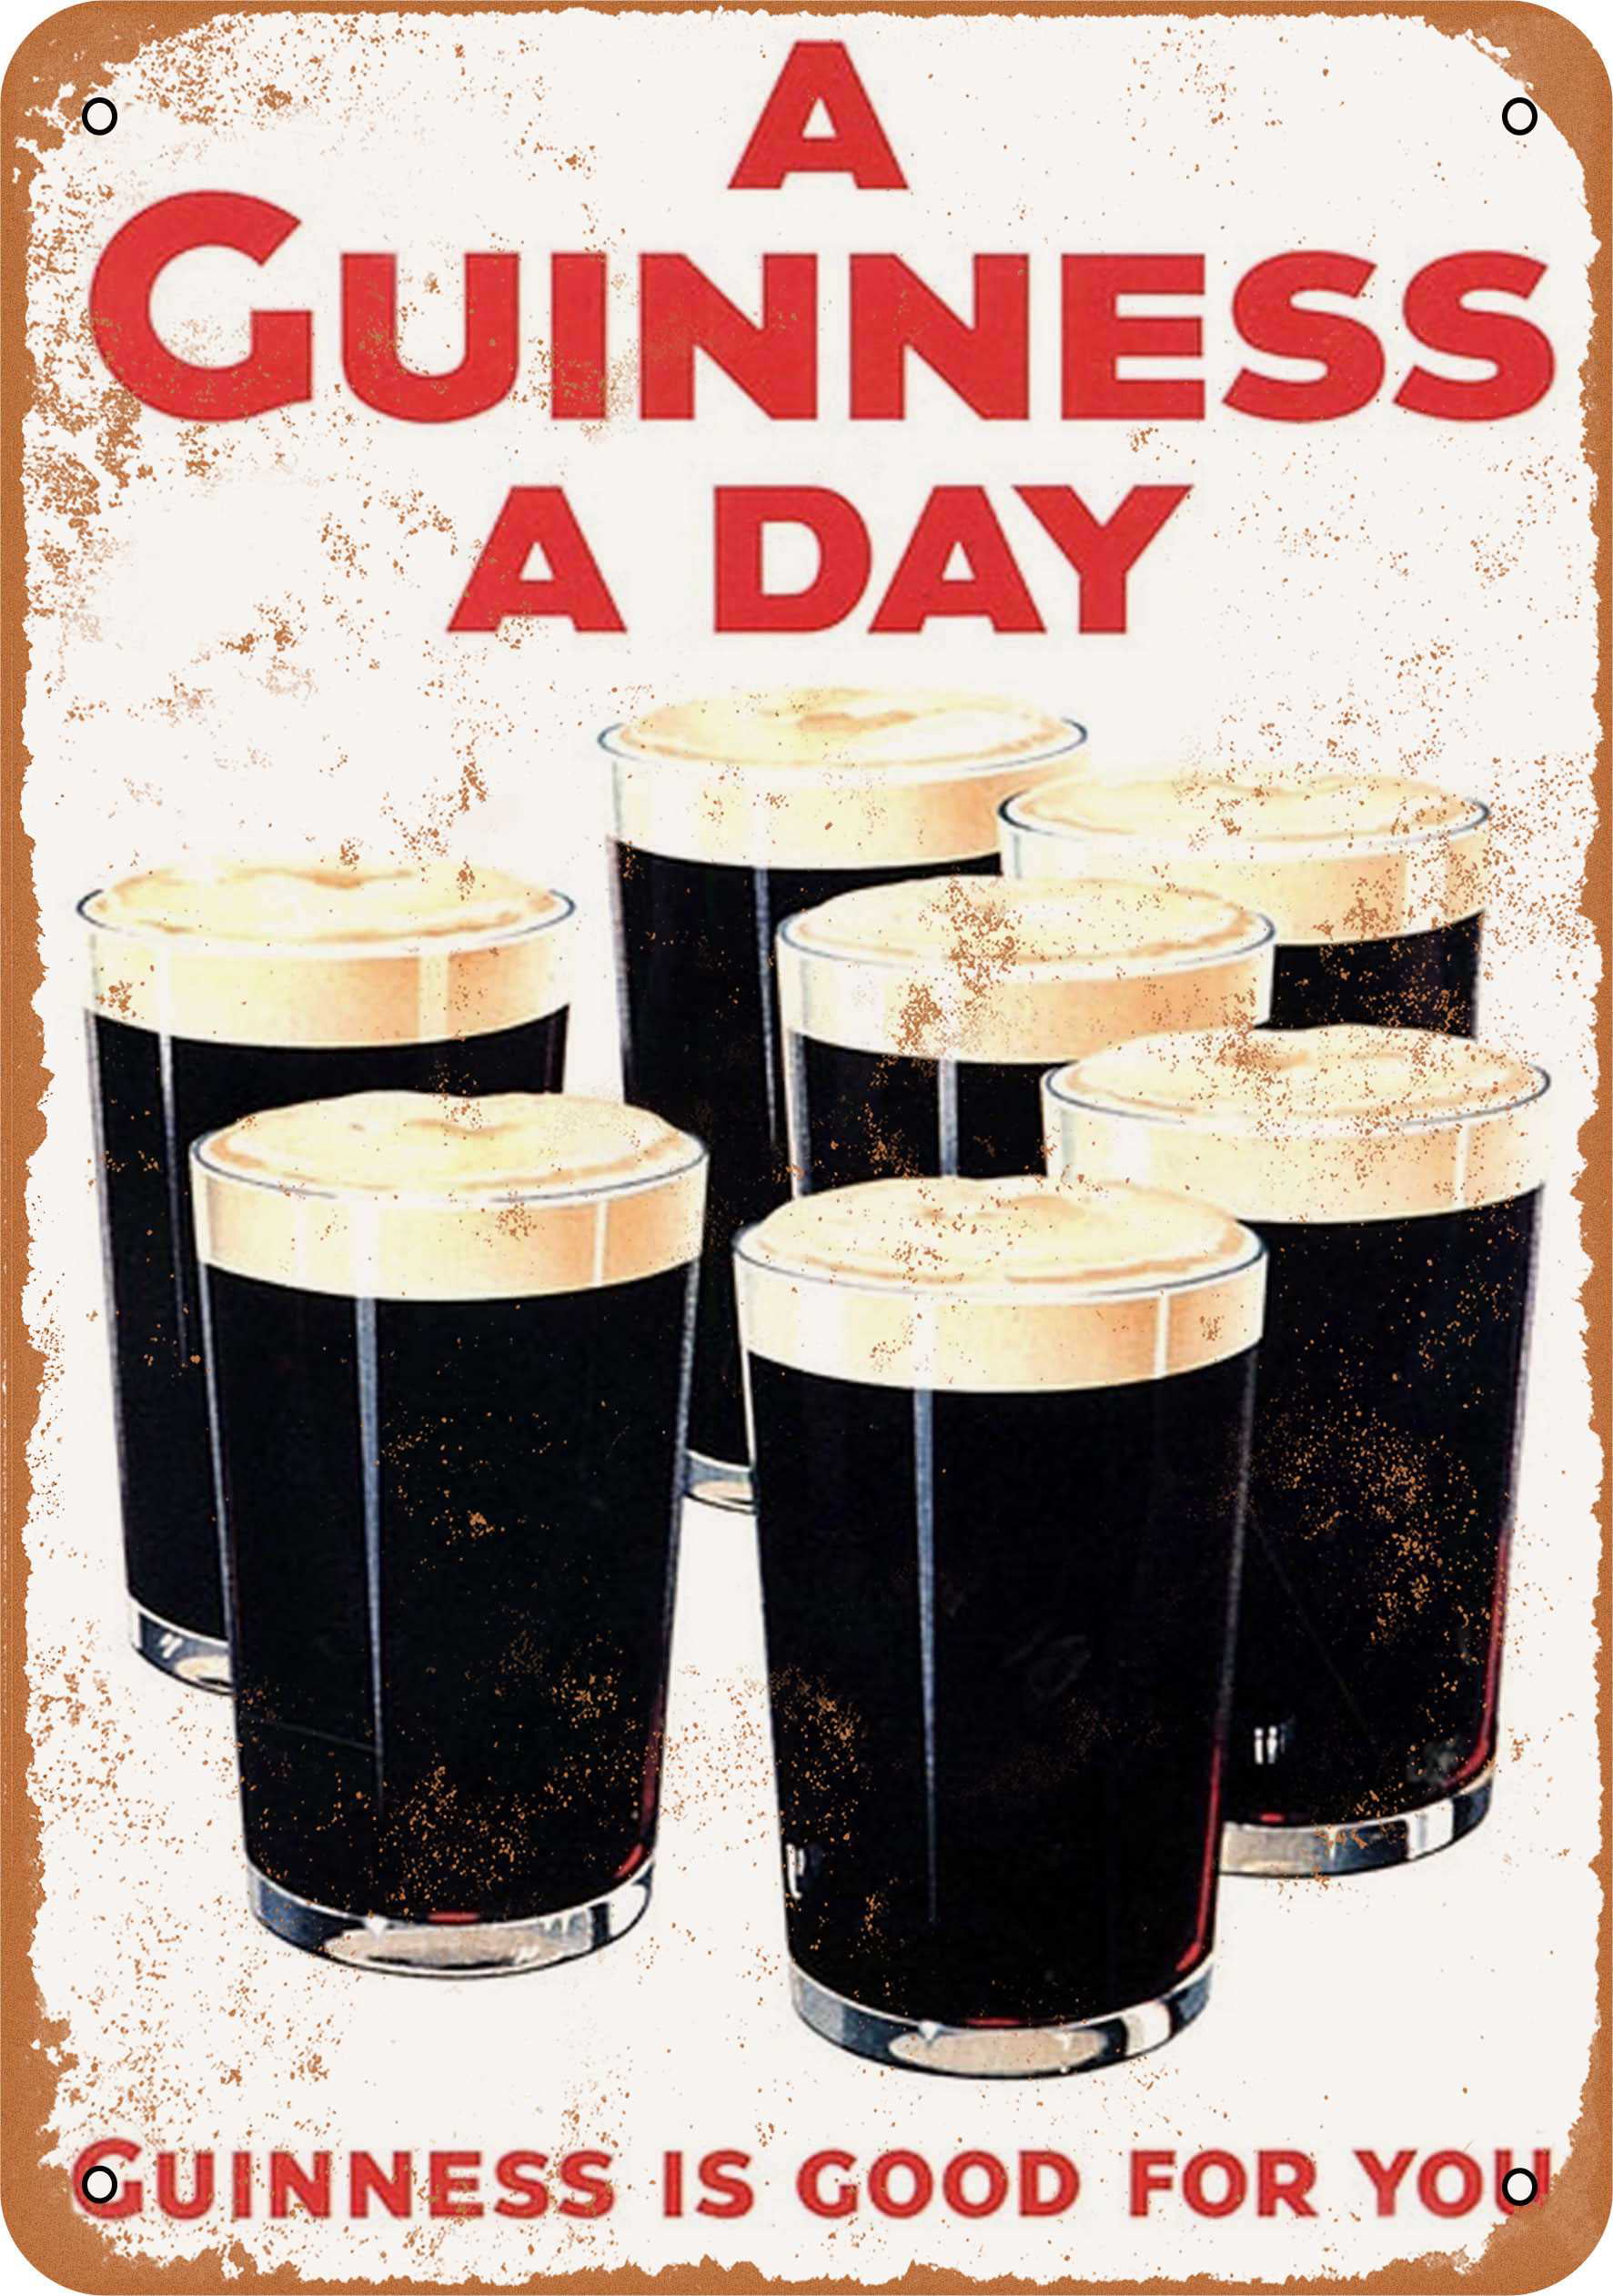 Guinness stout retro beer Clock man cave bar